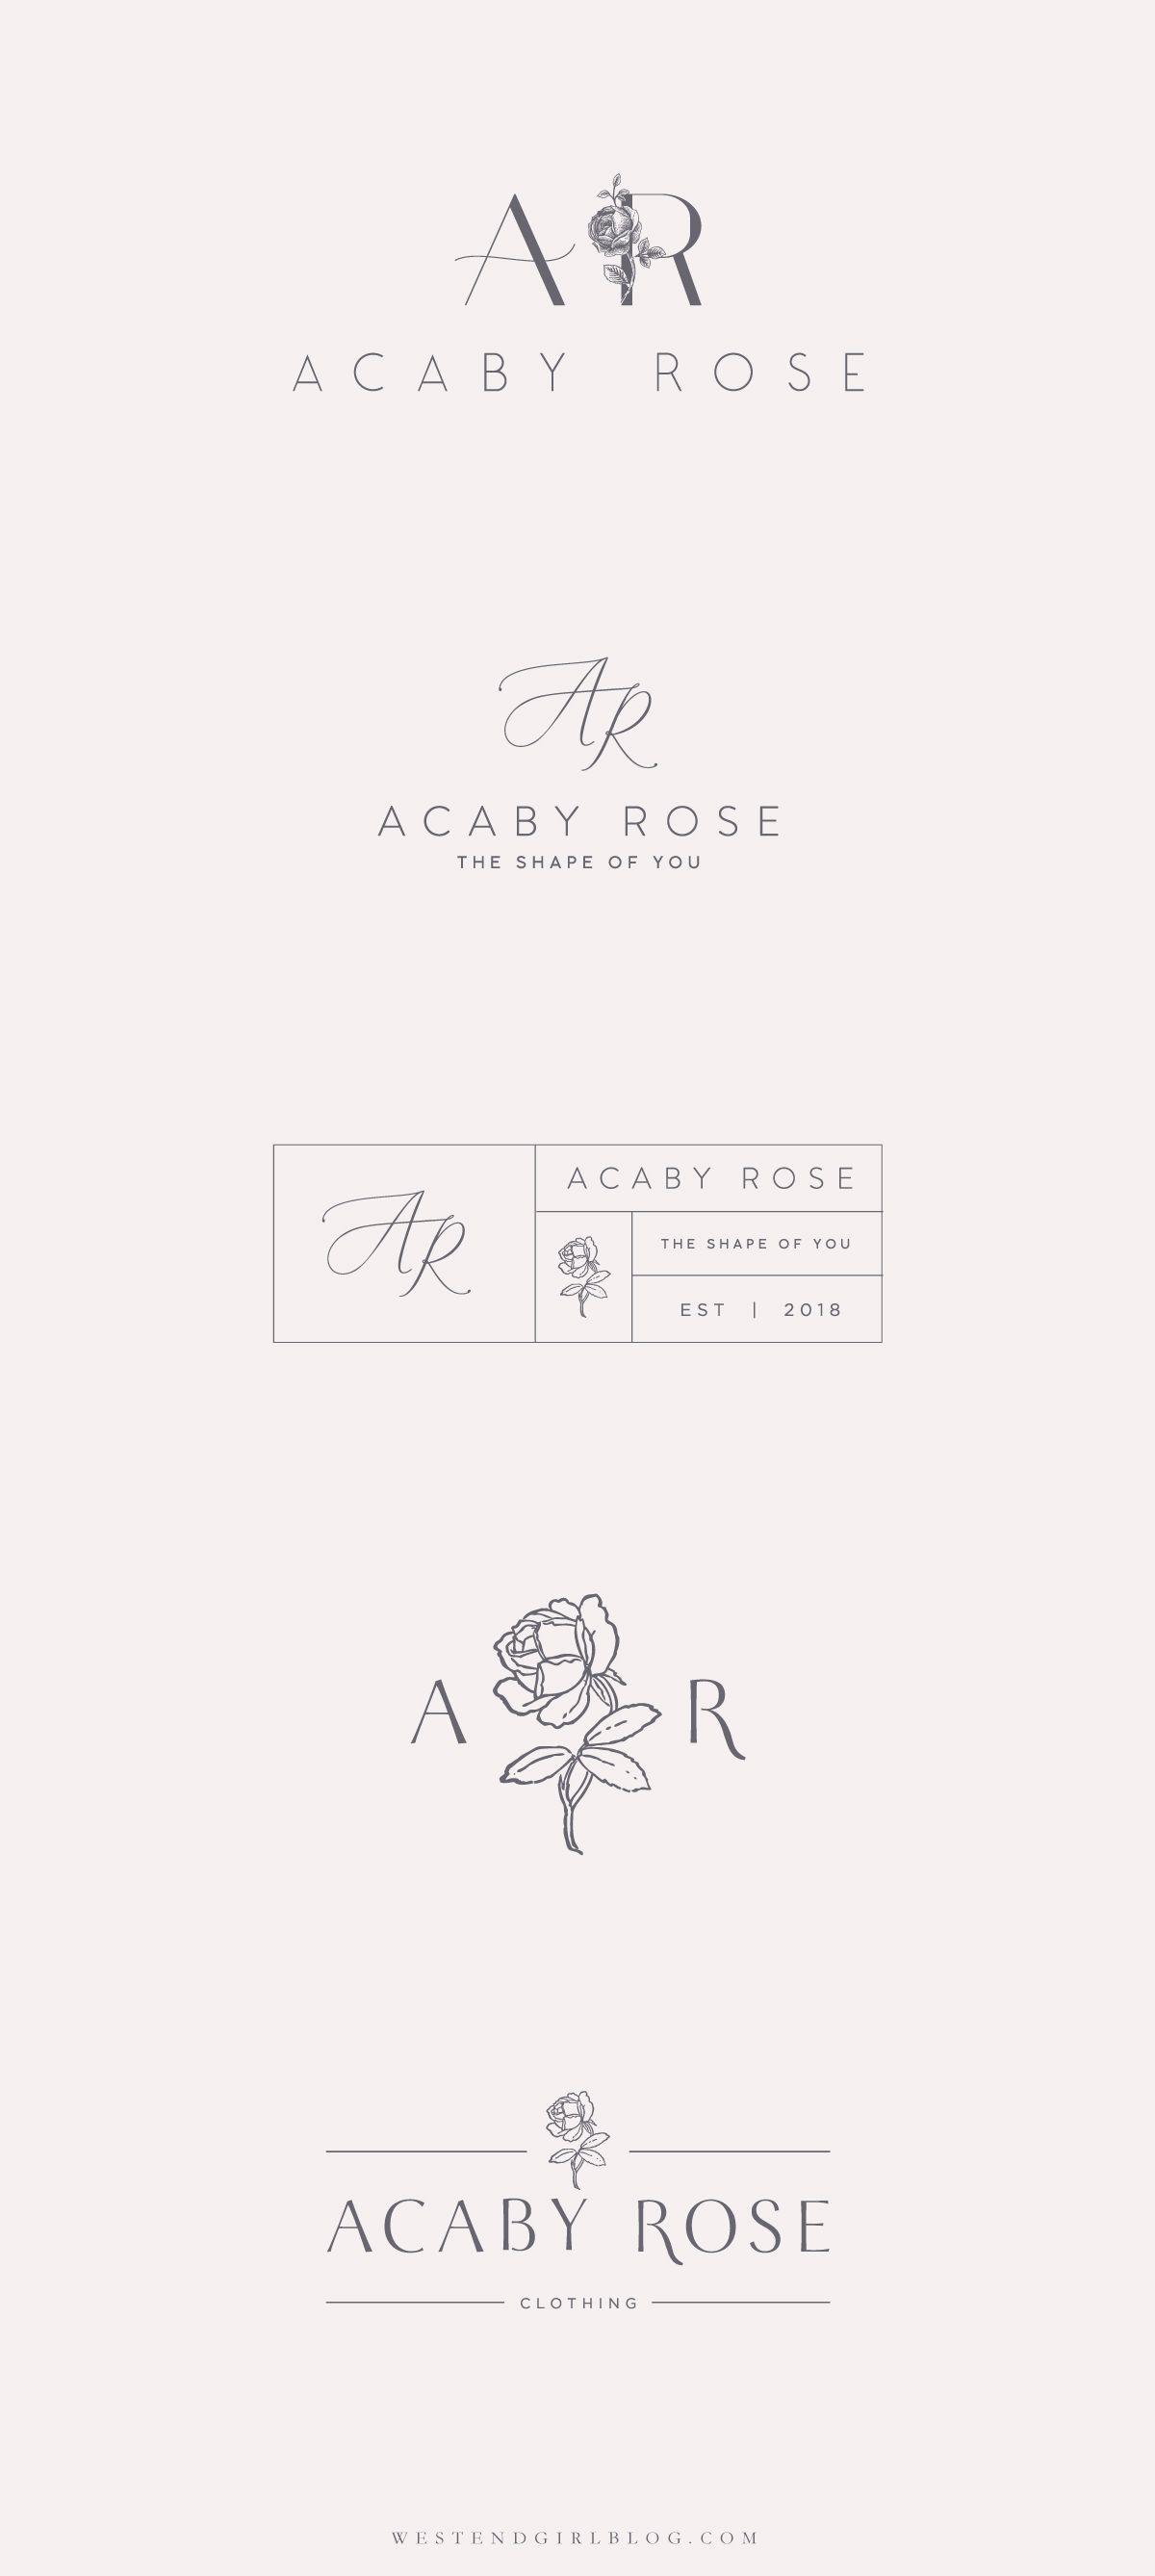 Rose Clothing Logo - Acaby rose clothing logo, branding design, logo options for rose